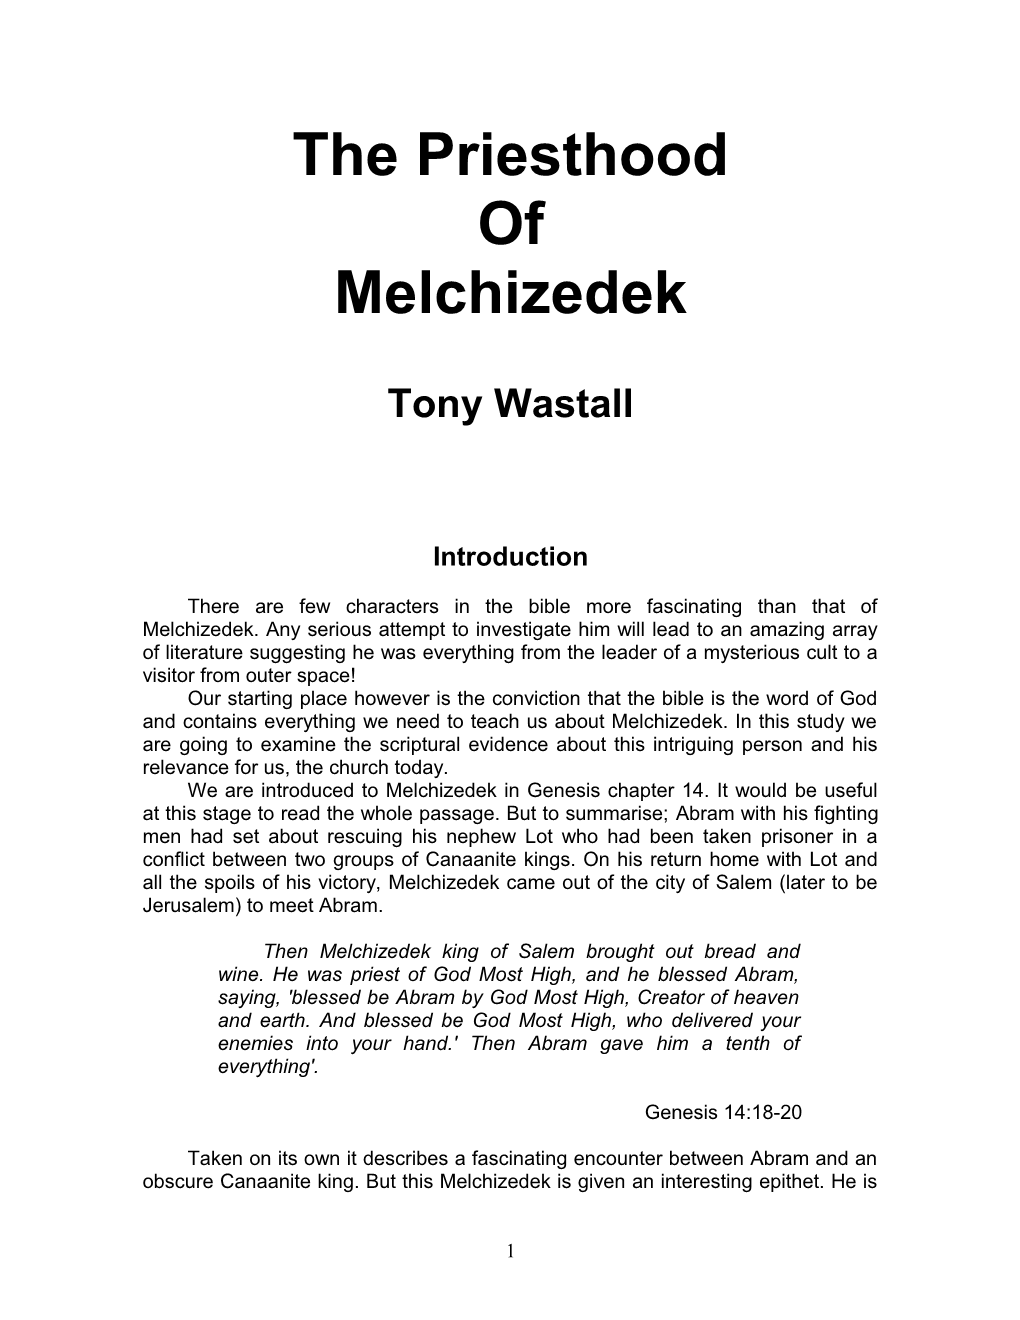 The Priesthood of Melchizedek